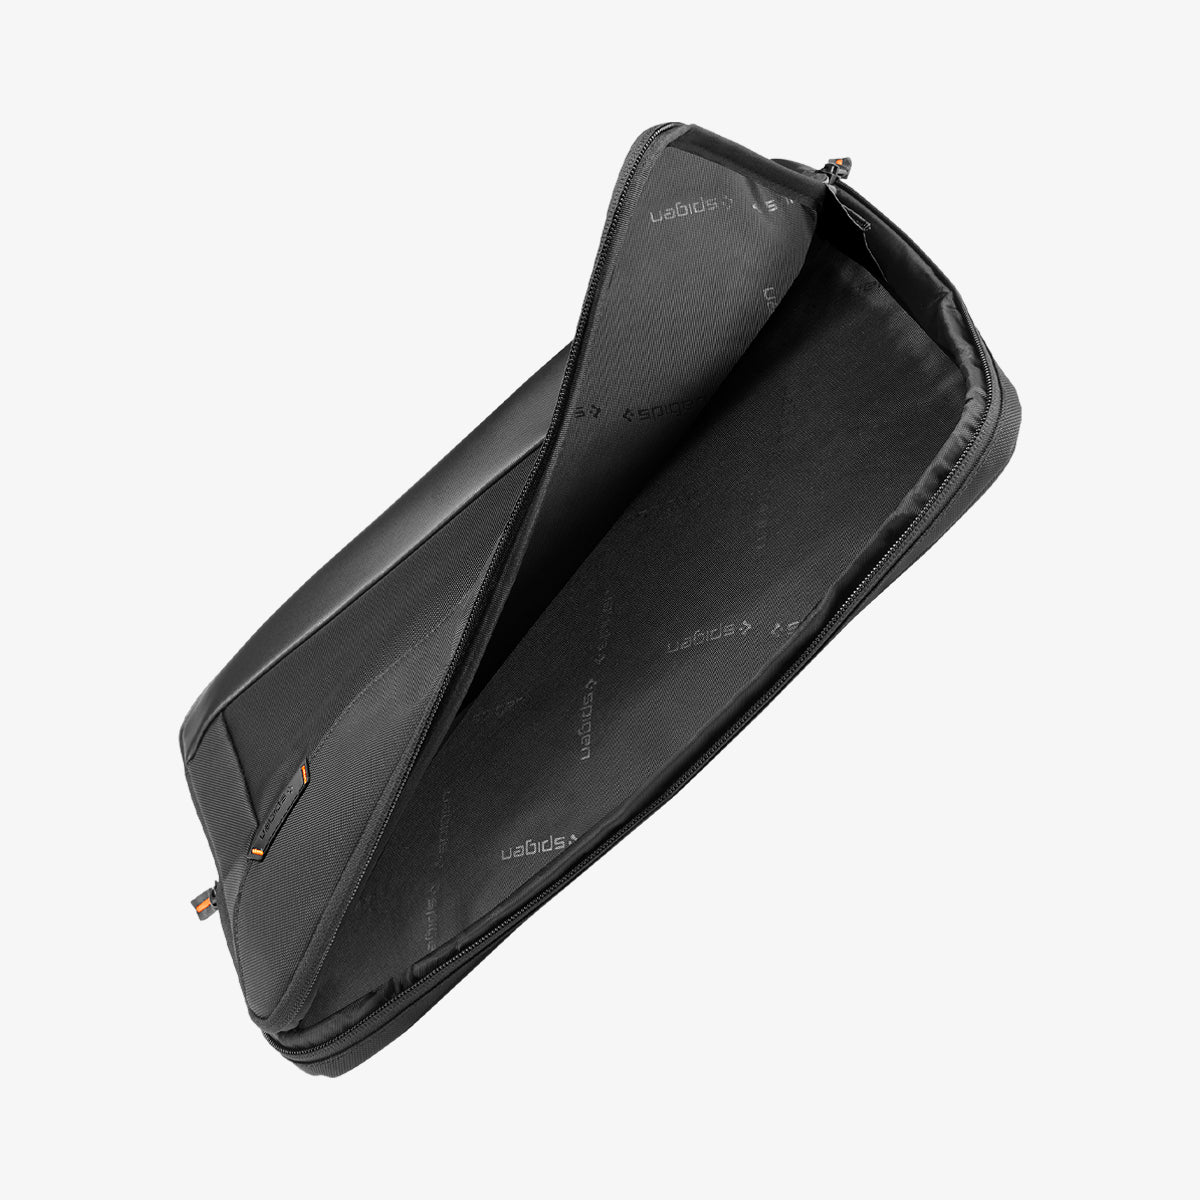 AFA05938 - KD100 16" Case Klasdan Laptop Pouch in black showing the pouch slightly open to show the inside